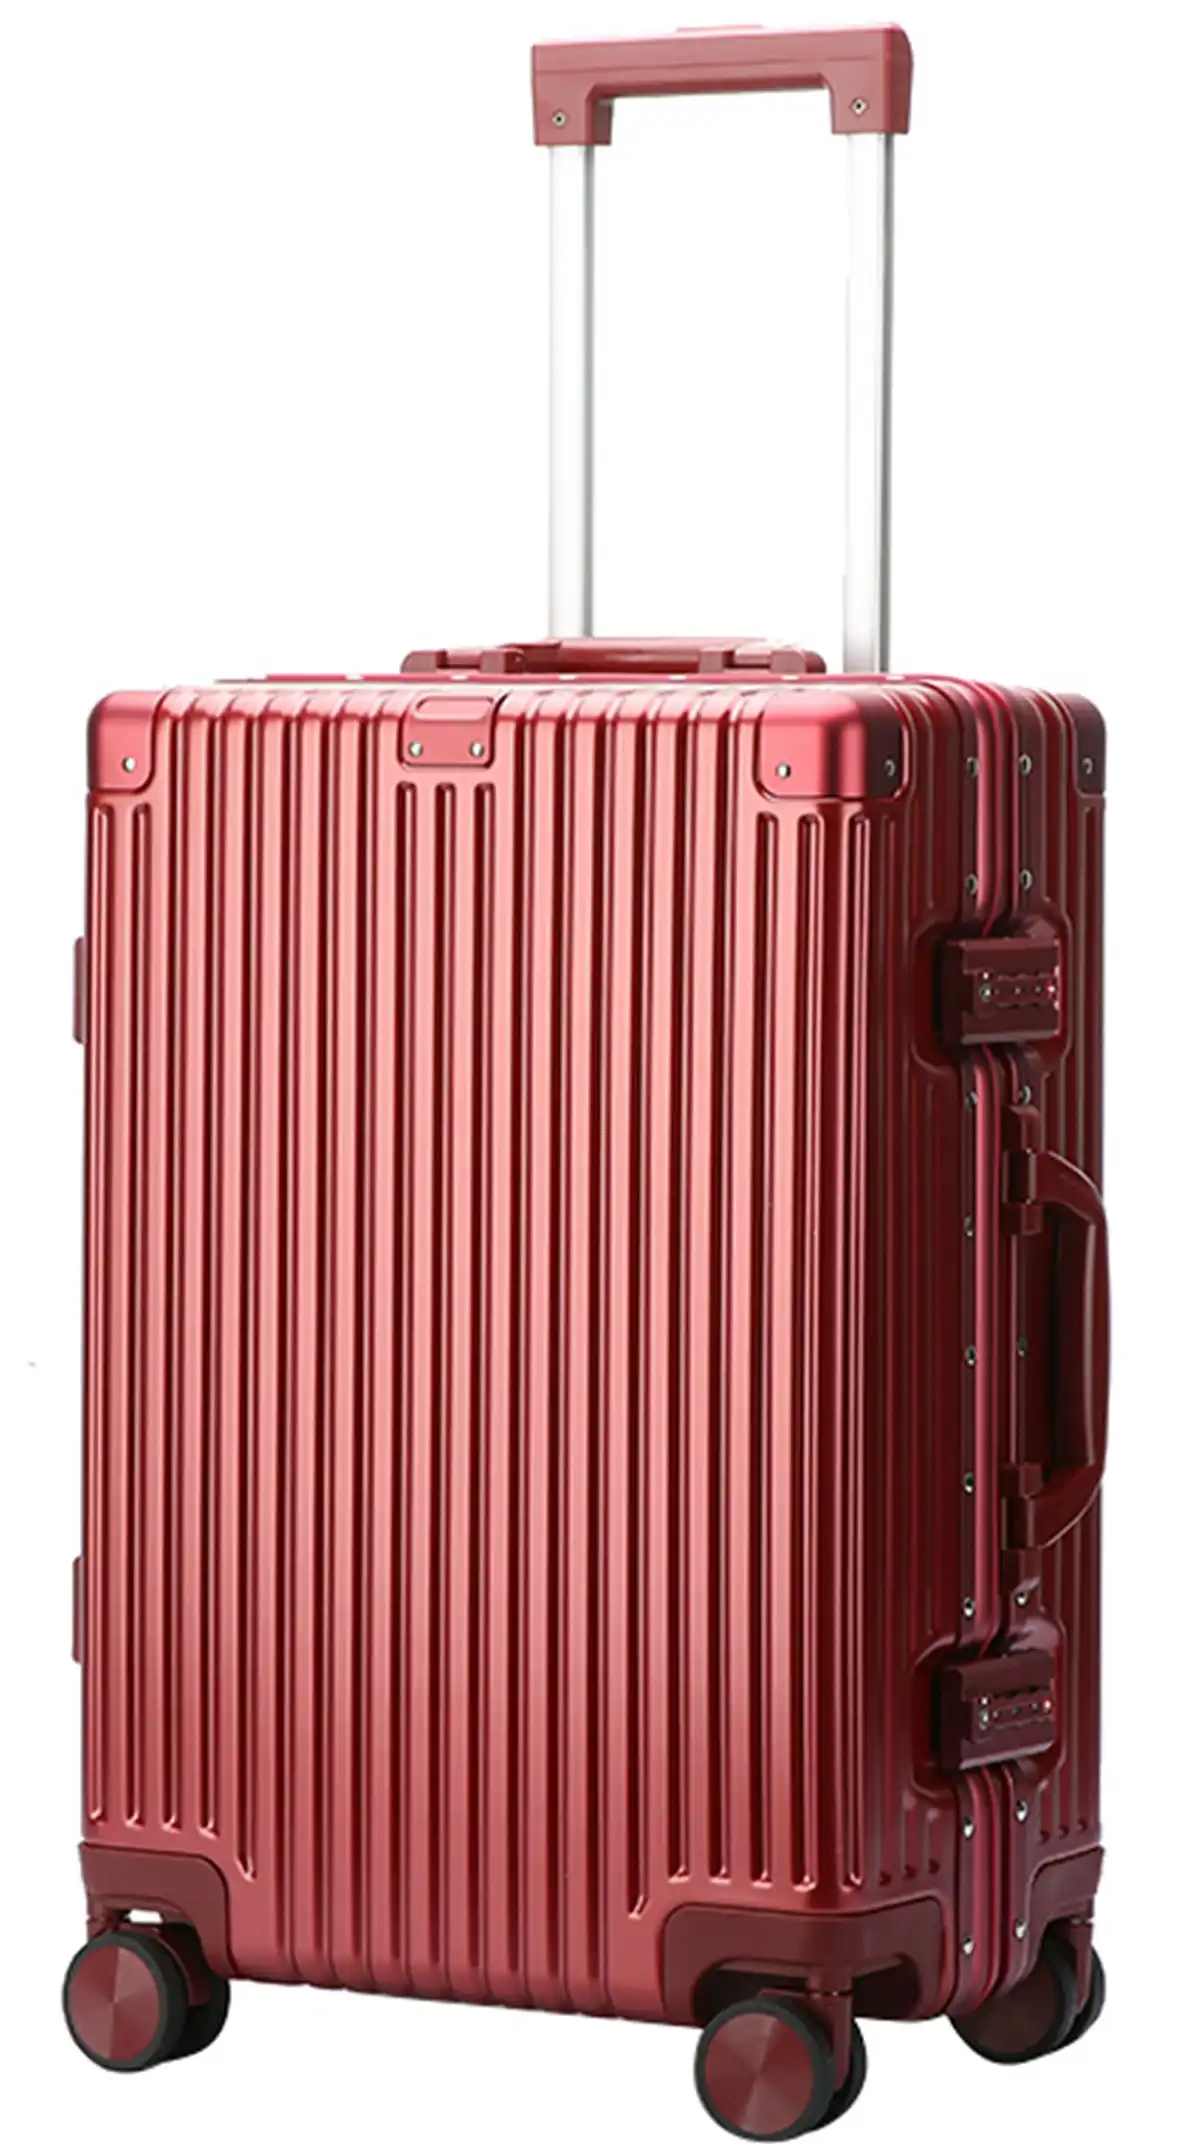 Bopai Aluminium Luggage Suitcase Light weight Carry on HardCase B3207 Red